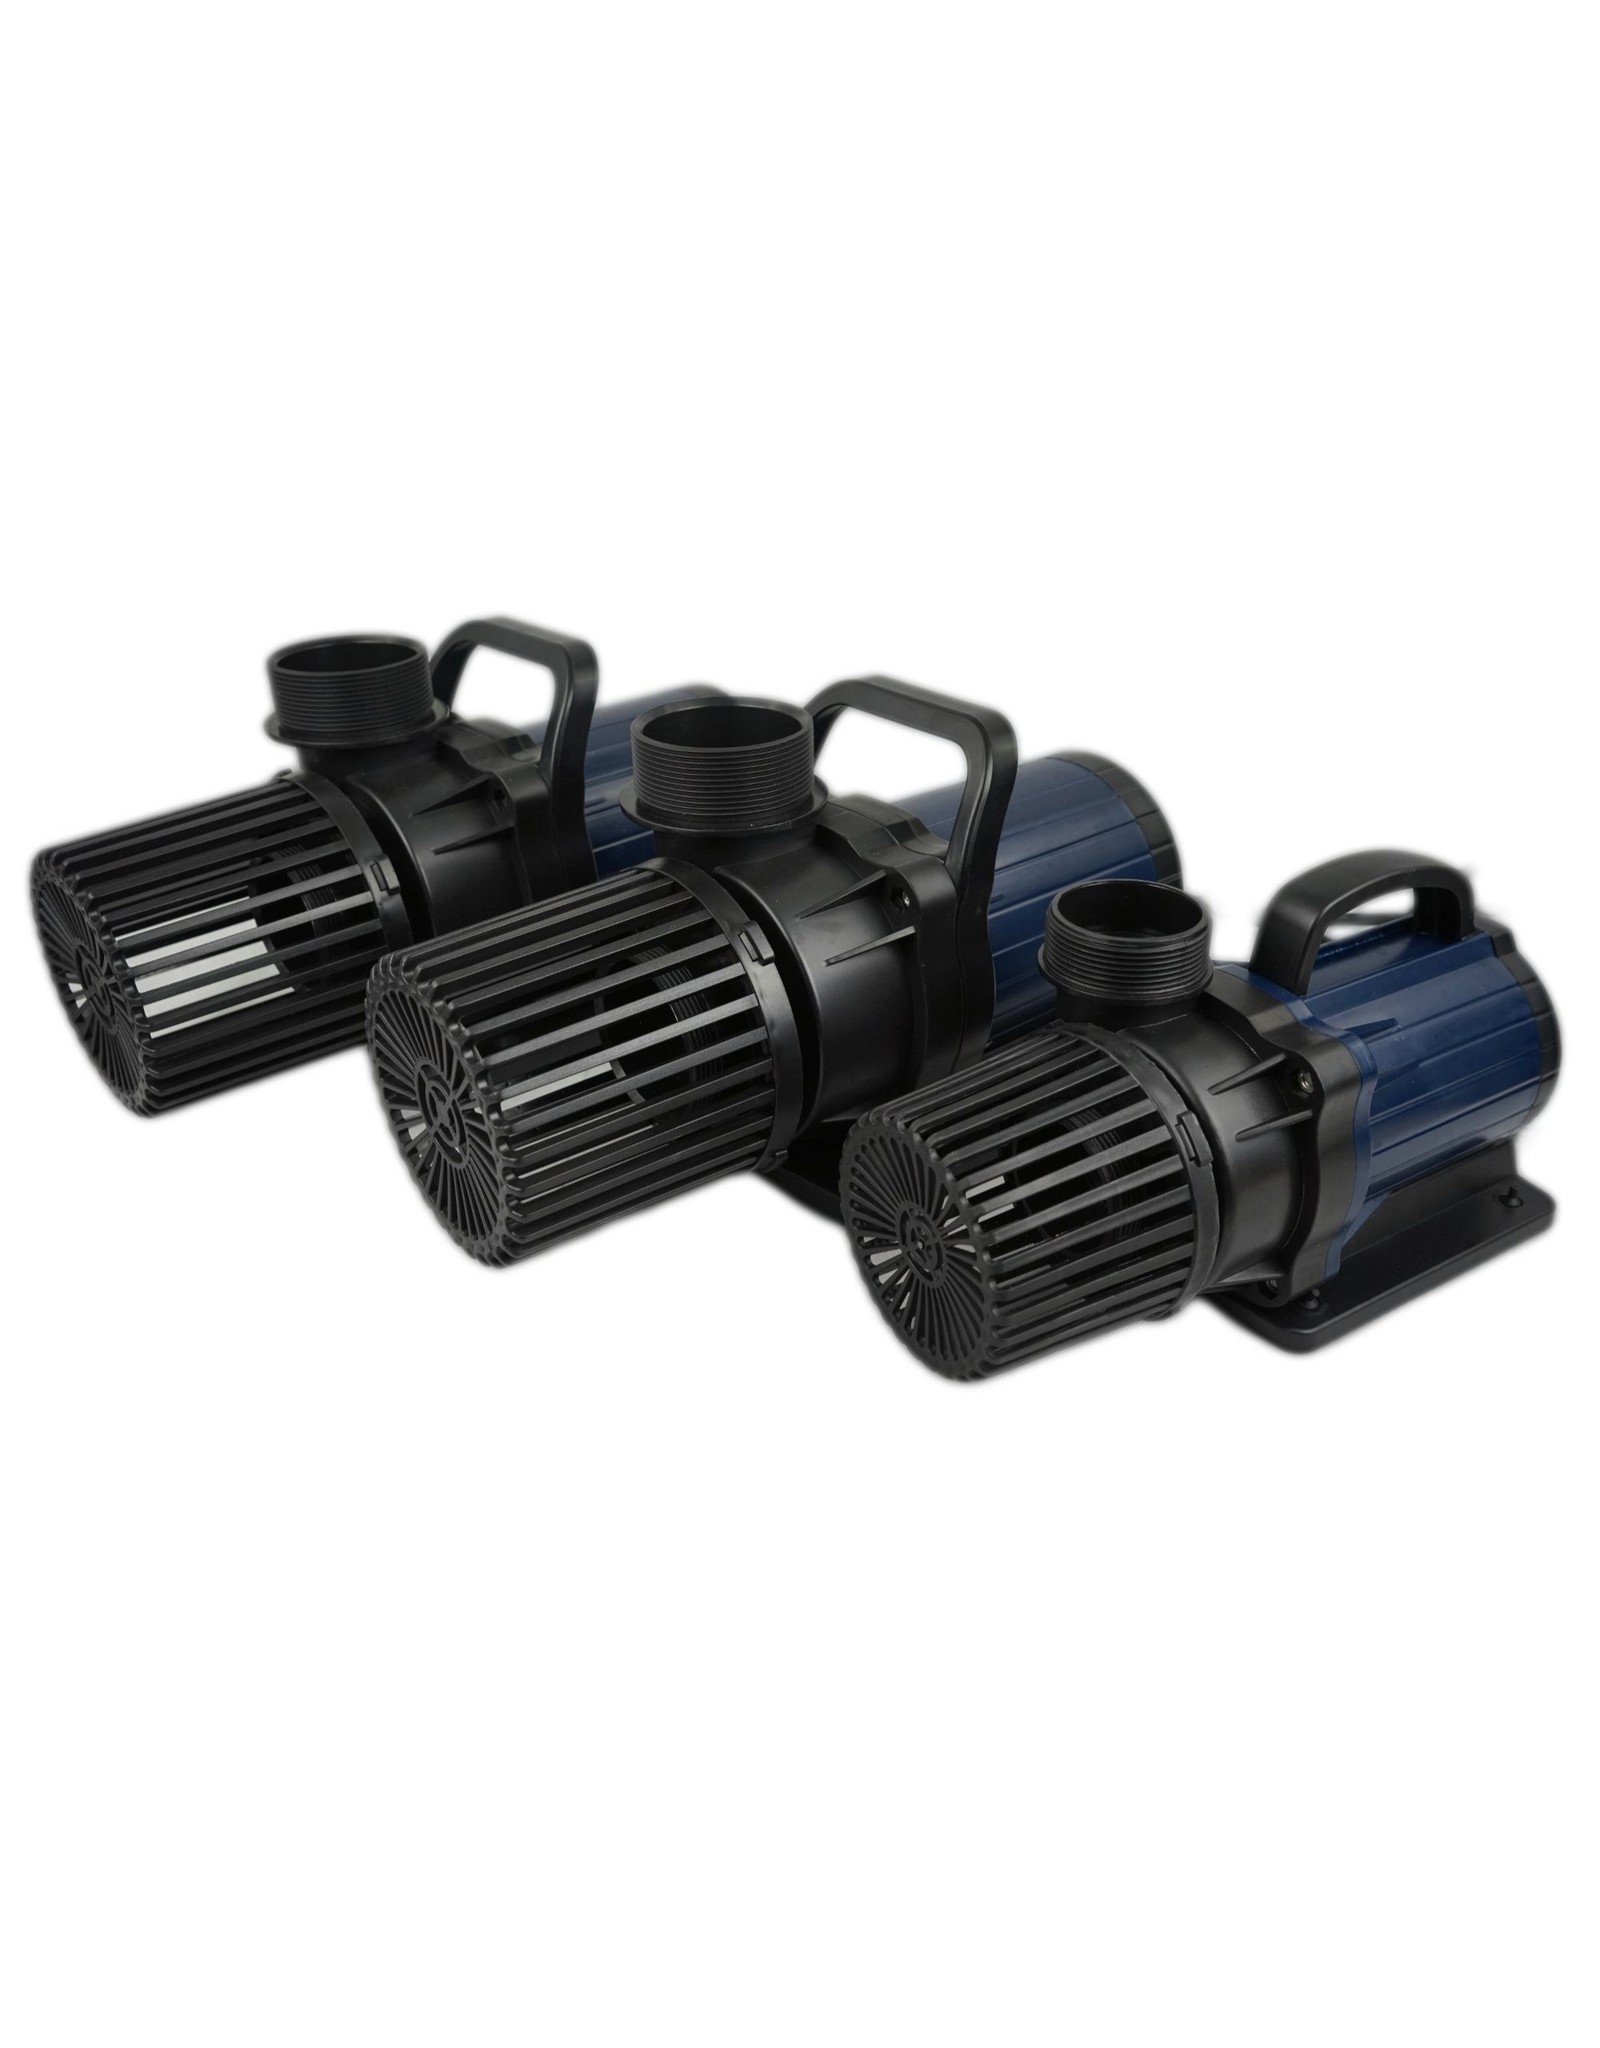 Aquariolux AC Vario Series Pond Pumps / Filter Pumps